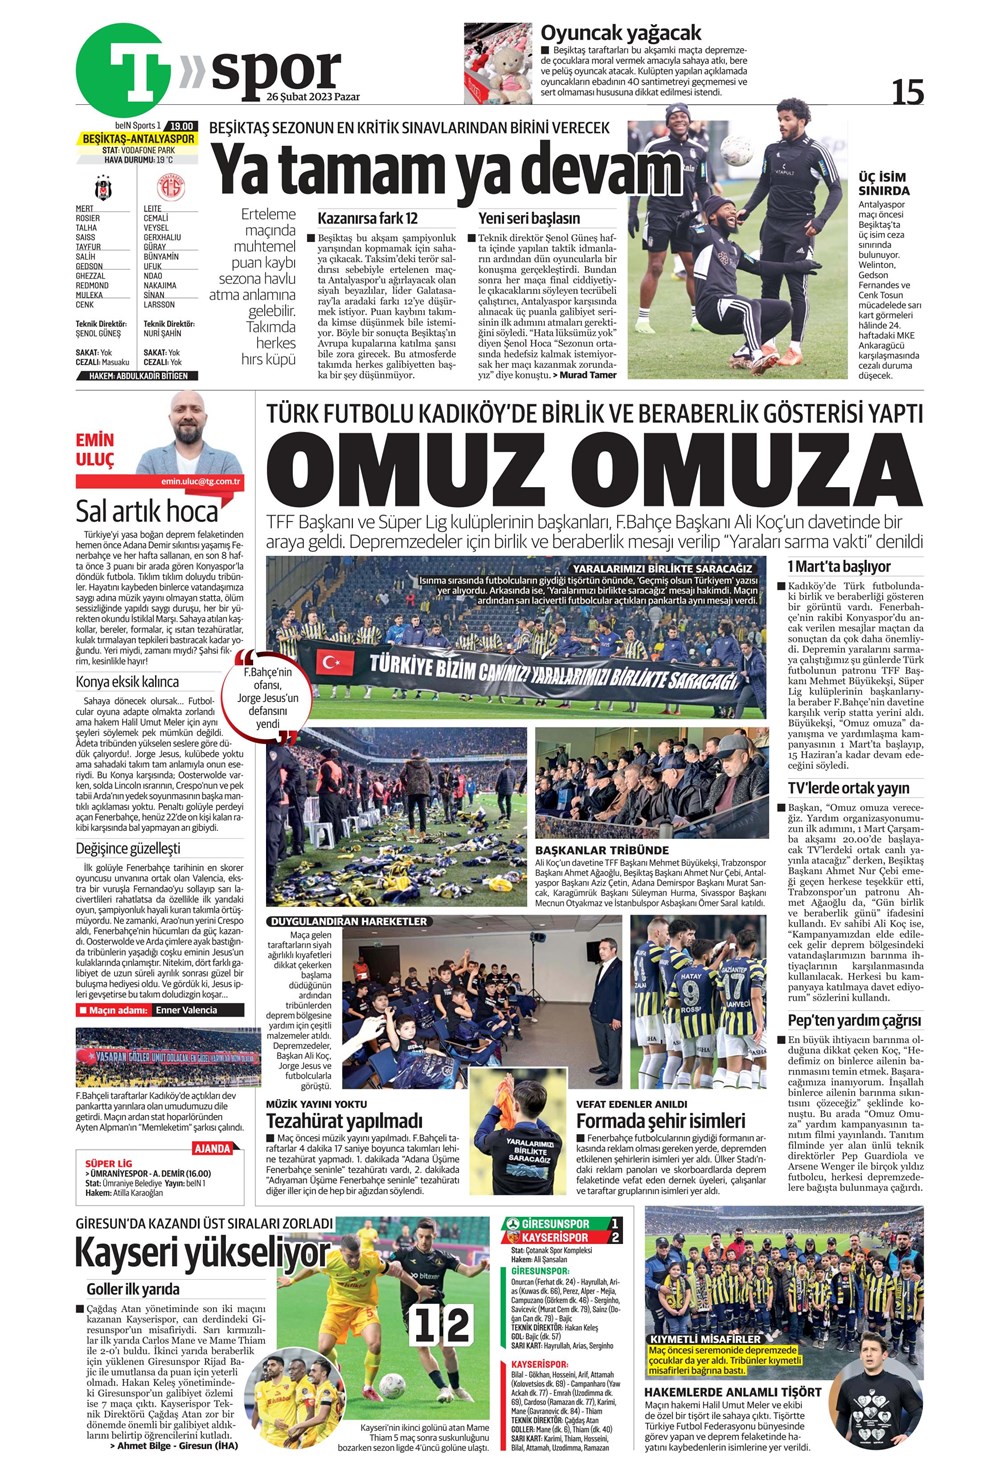 "Valenci'ağa' böyle istedi" - Sporun manşetleri  - 36. Foto